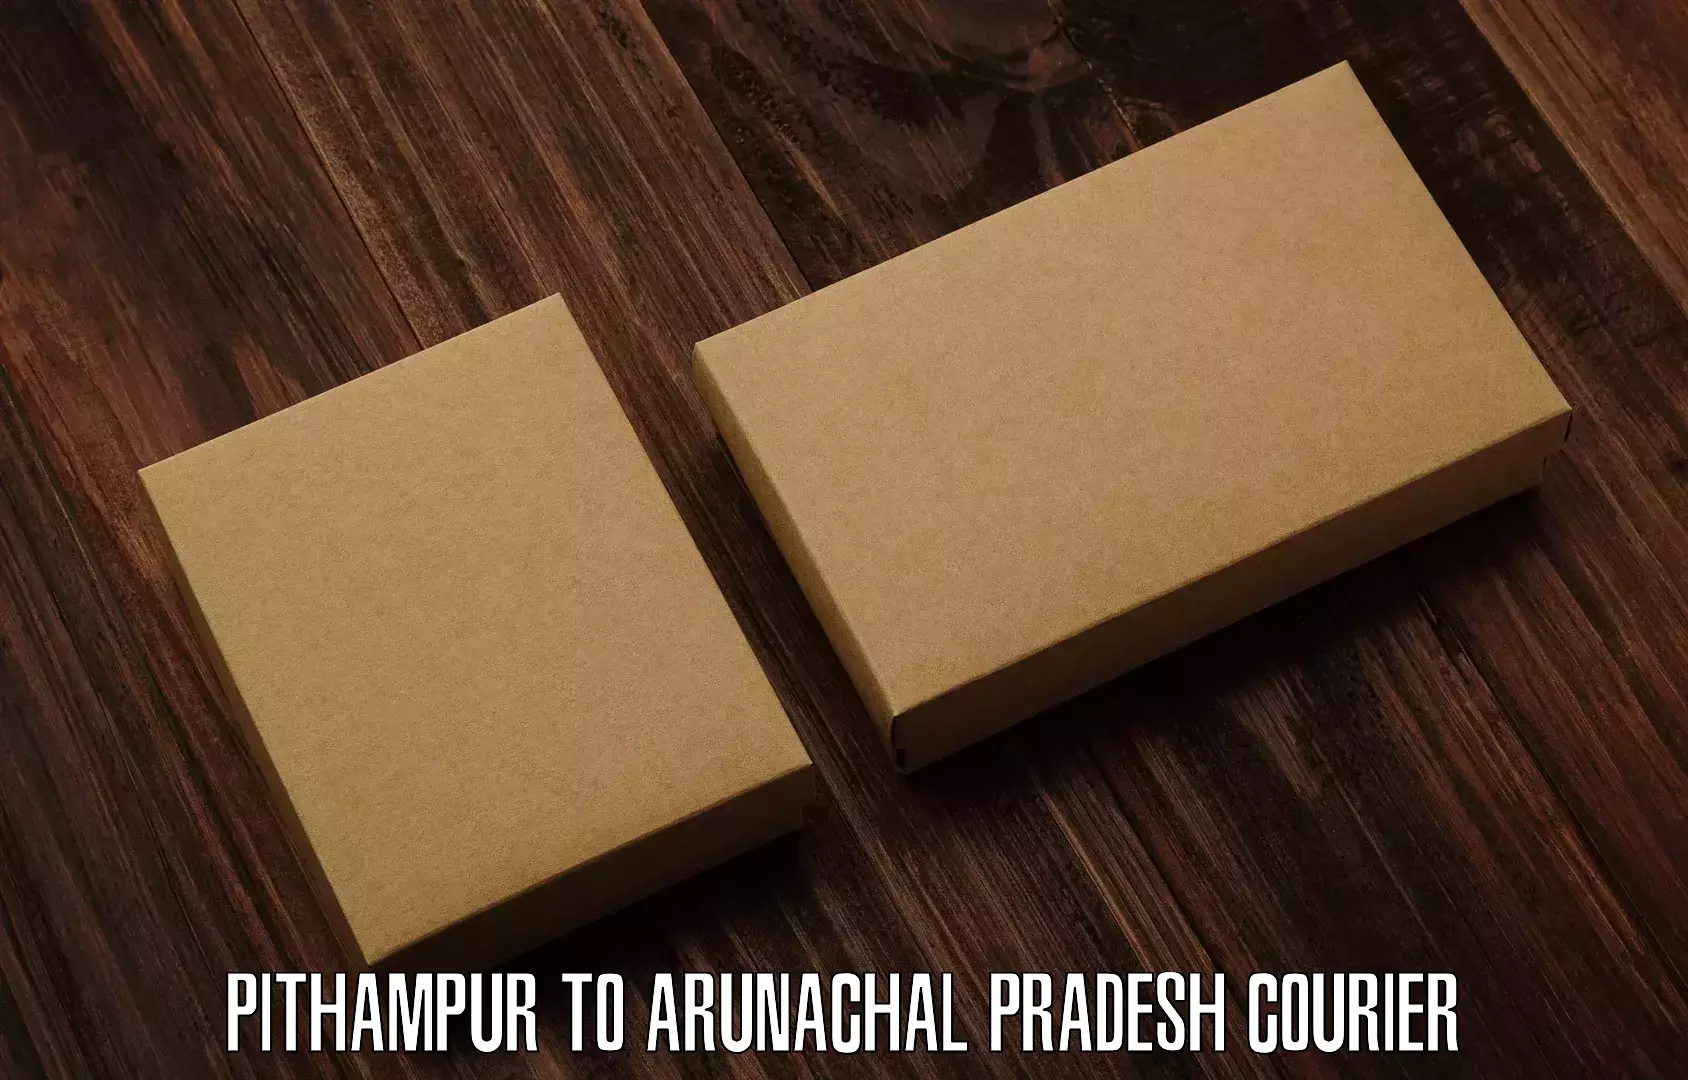 Global shipping solutions Pithampur to Arunachal Pradesh